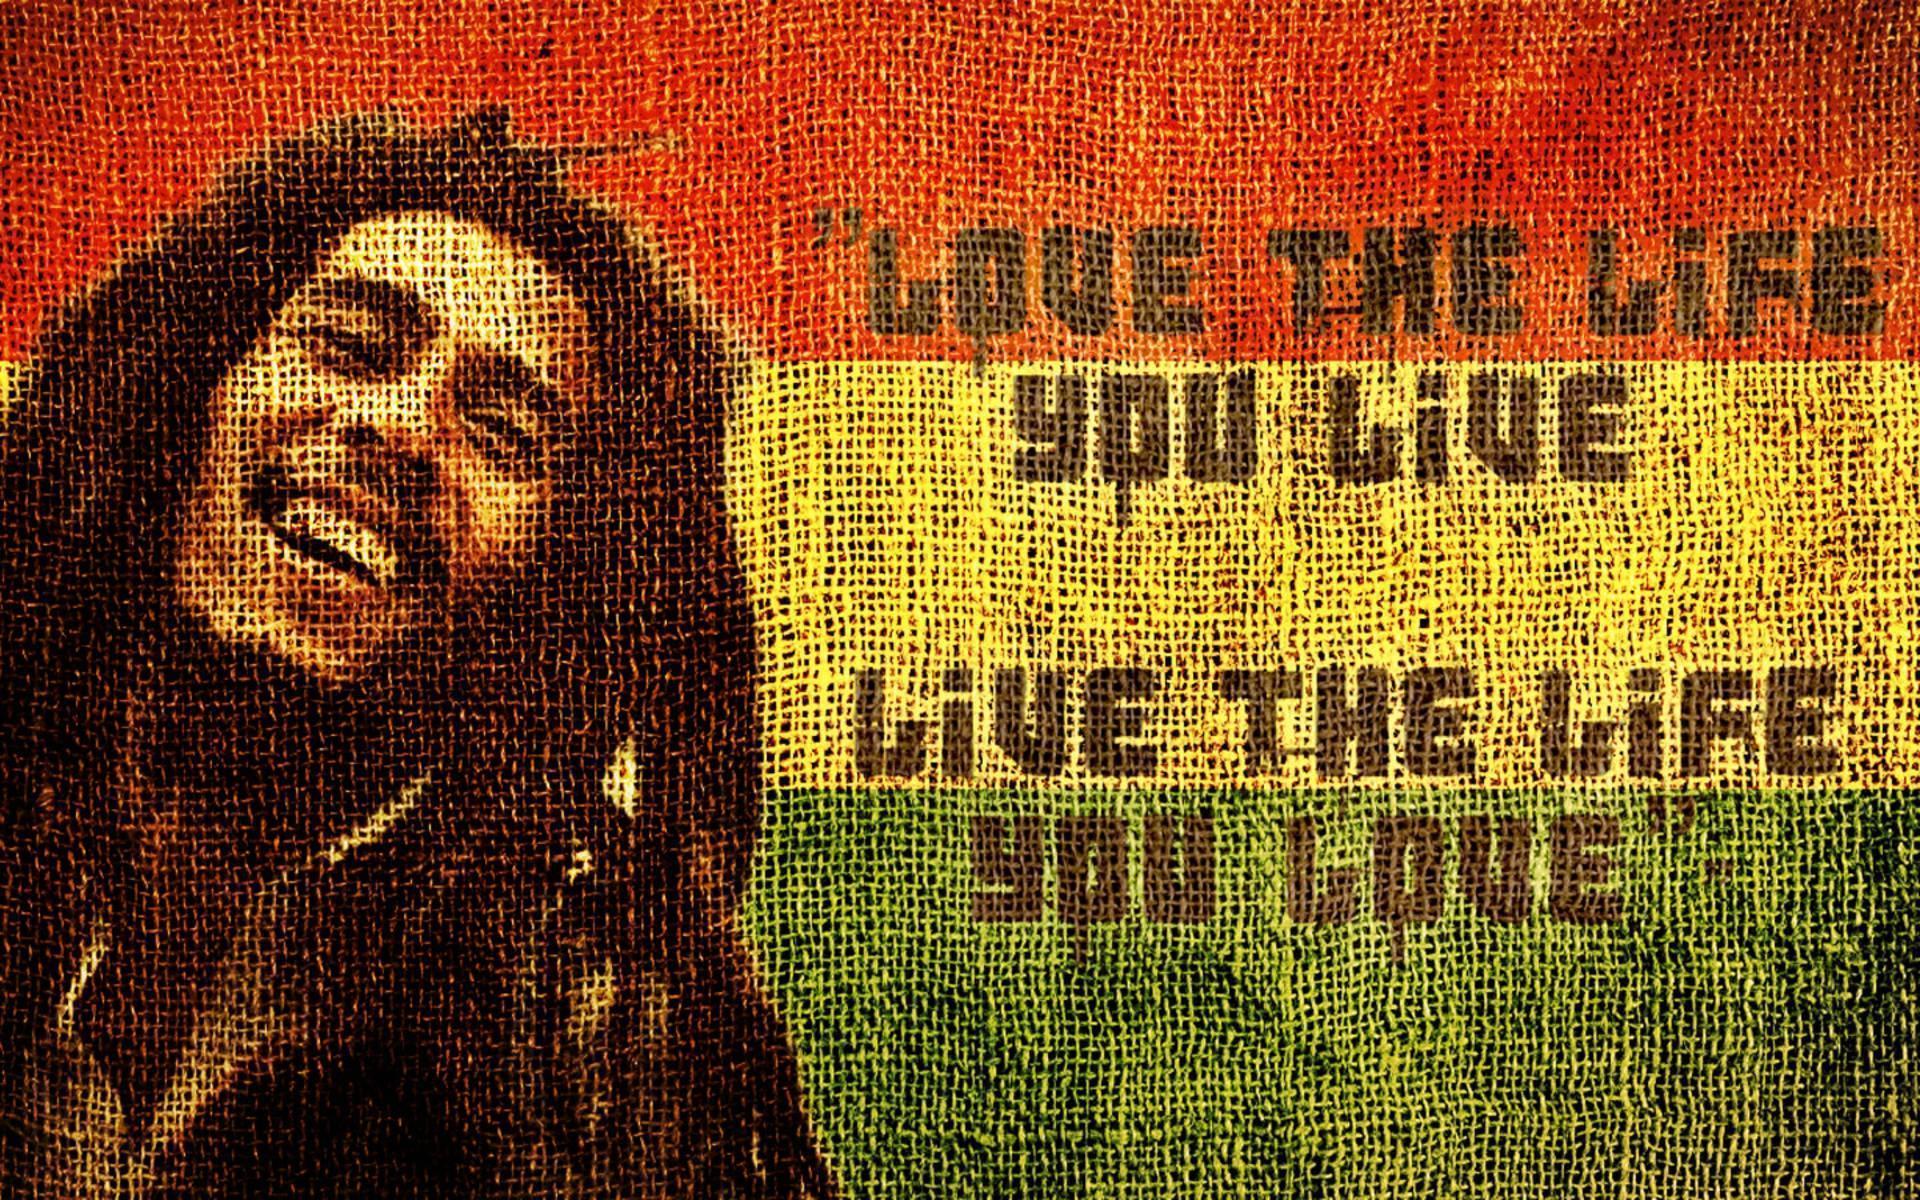 Bob Marley Wallpaper Download Free. HD Wallpaper Range